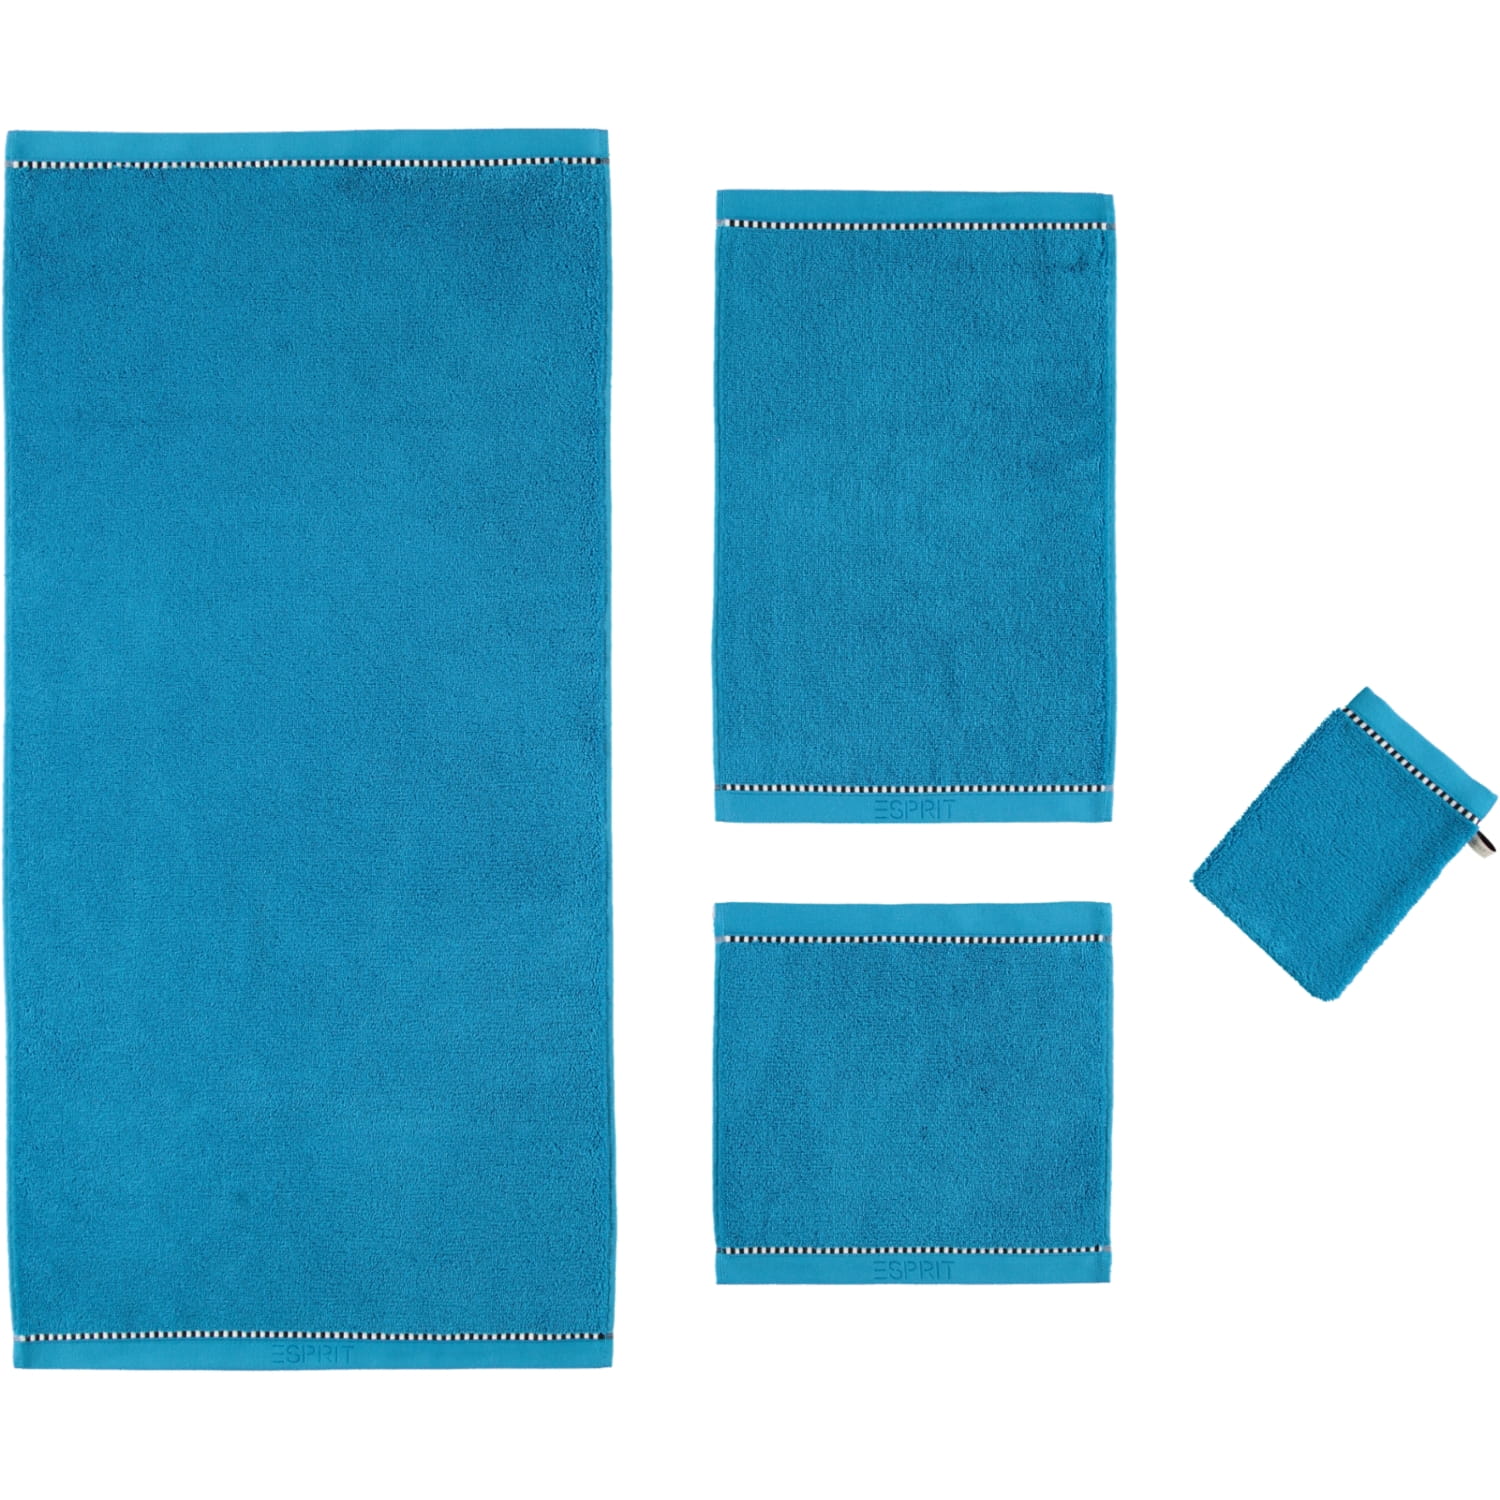 Farbe: blue Marken 4665 ESPRIT - | ESPRIT | Handtücher - ocean | Solid Box Esprit